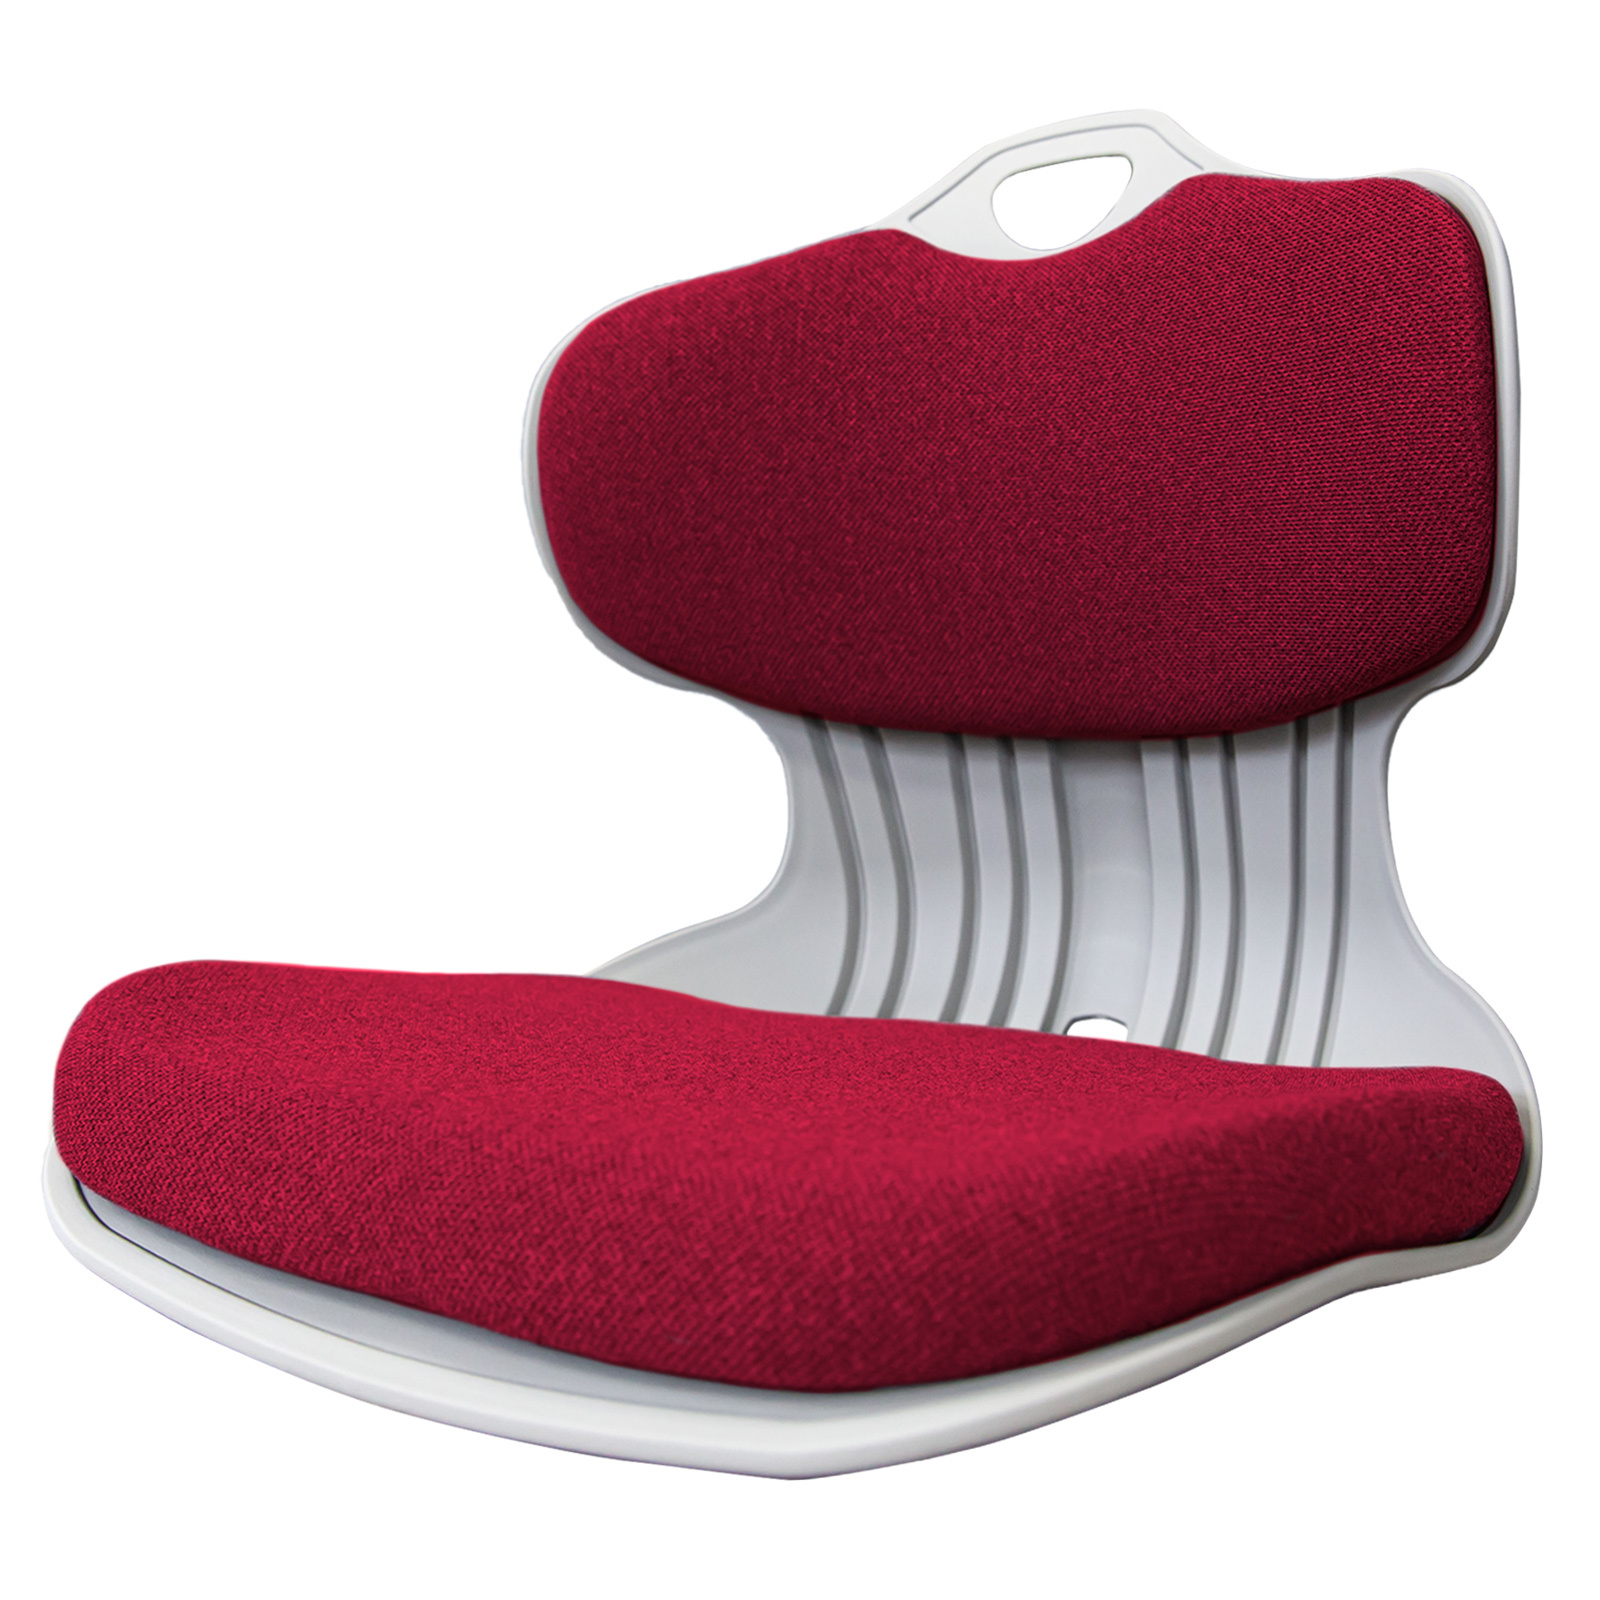 Korean Slender Posture Correction Chair - RED